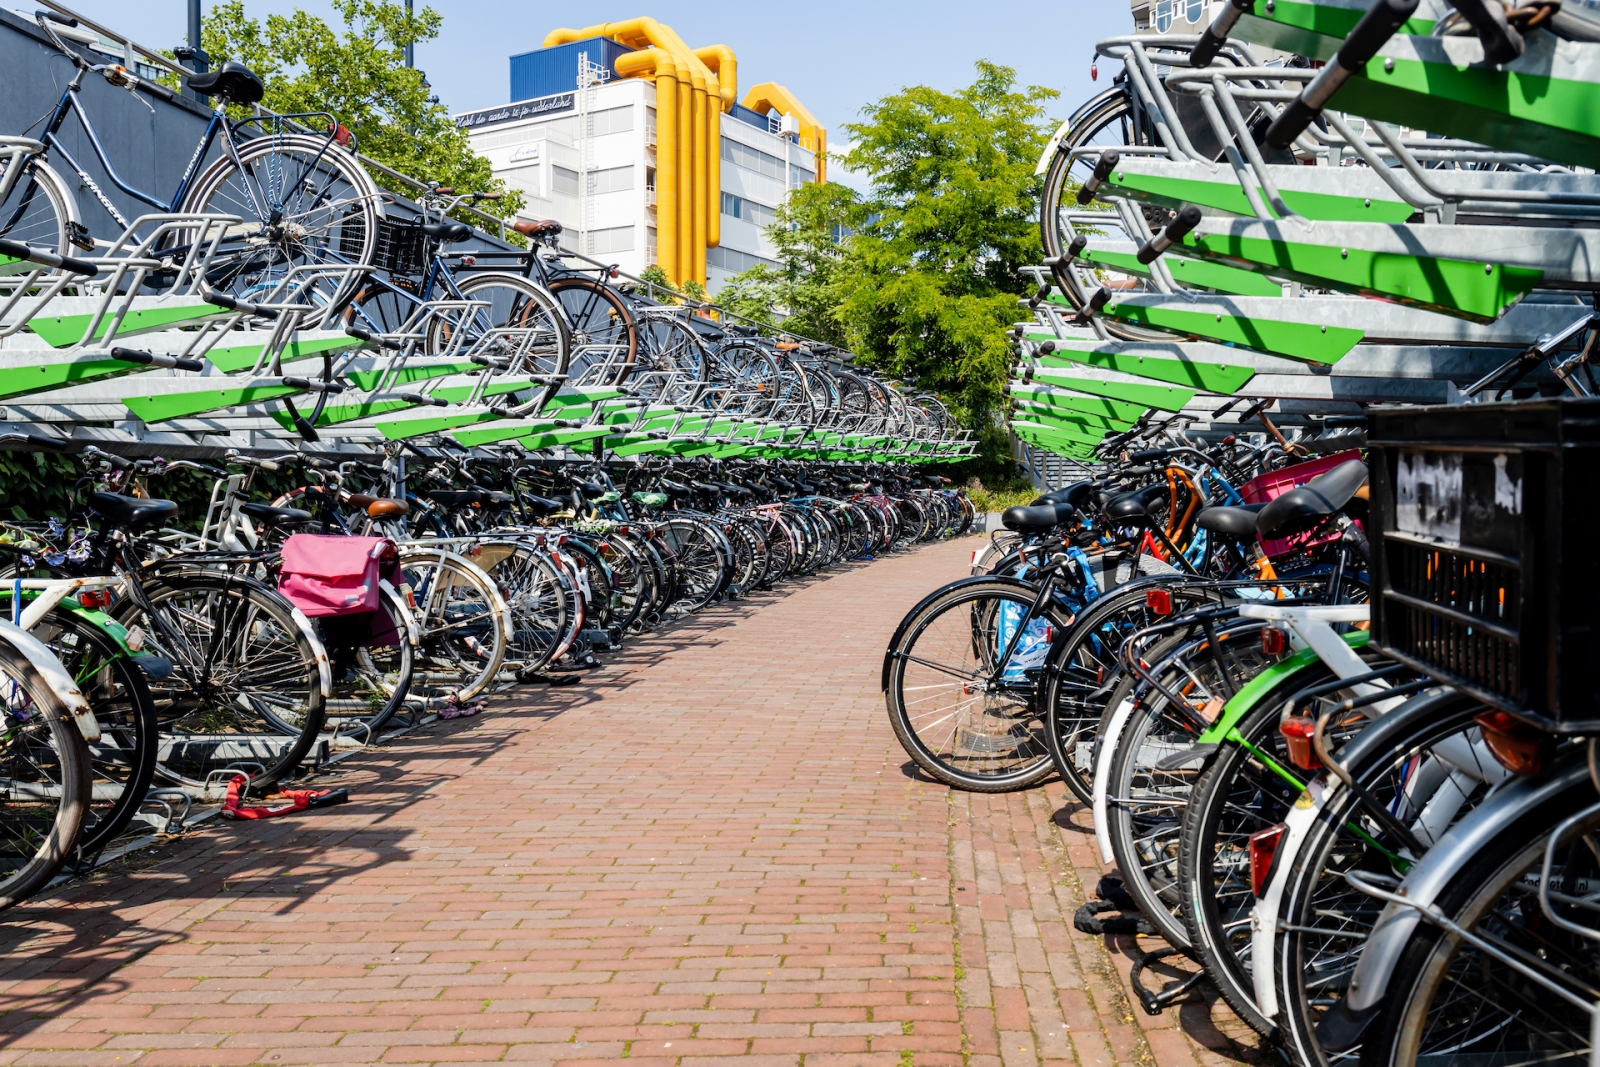 Parking à vélos Gare de Rotterdam Blaak, Pays-Bas